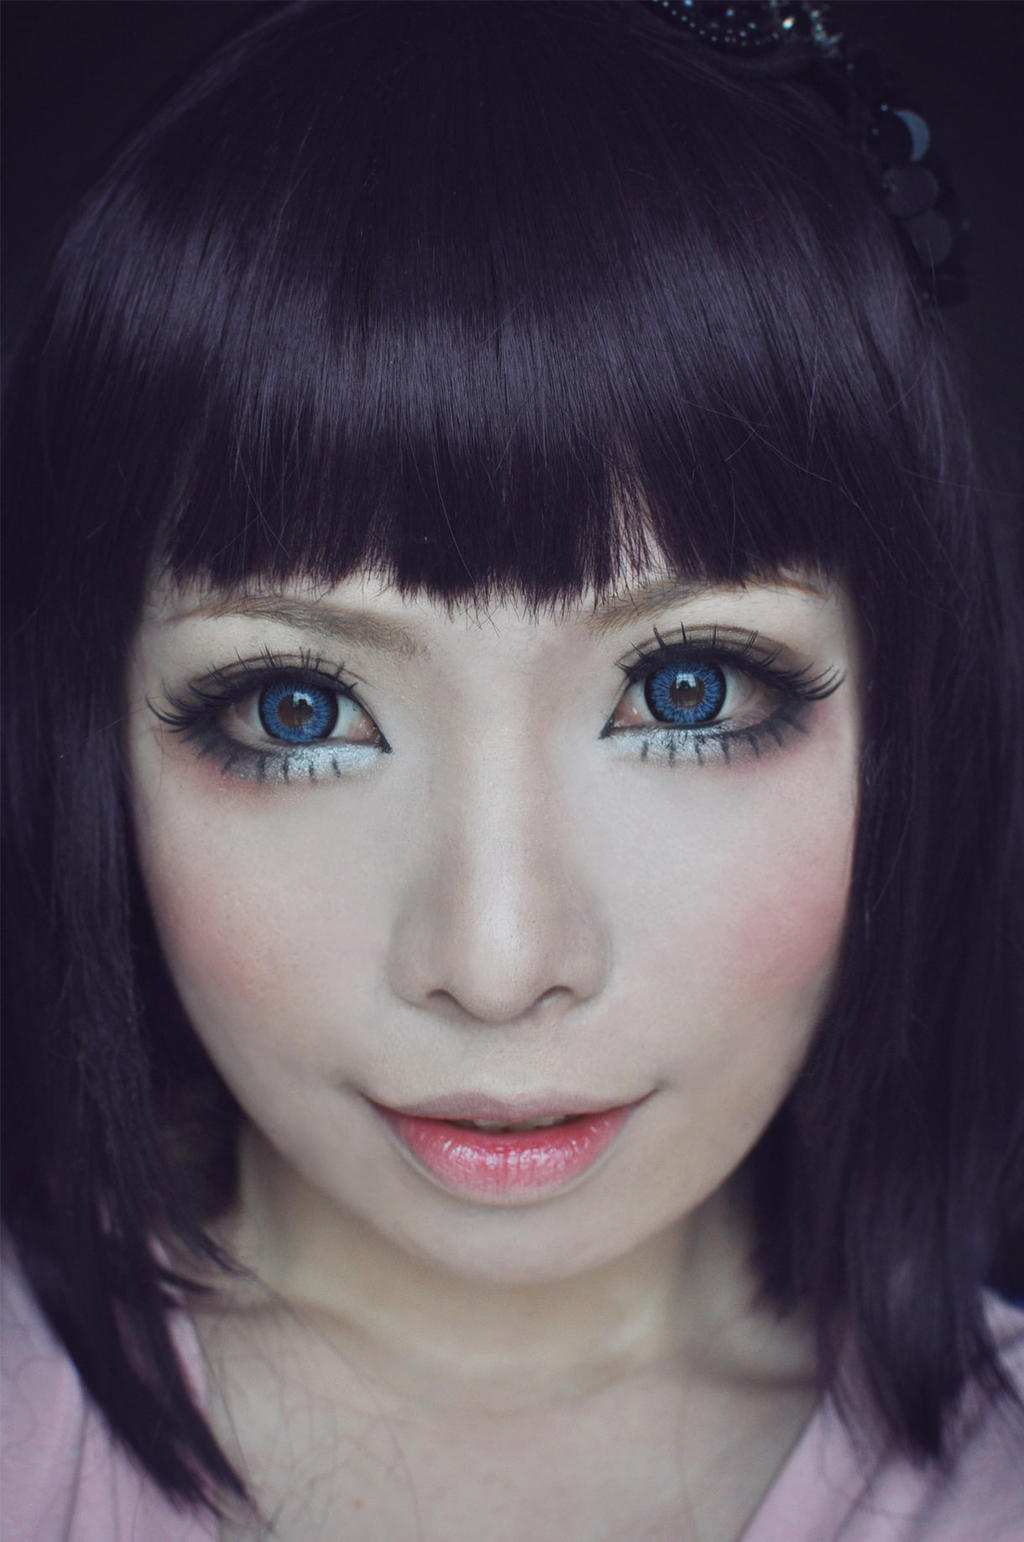 Cosplay Eyes Makeup by mollyeberwein on DeviantArt